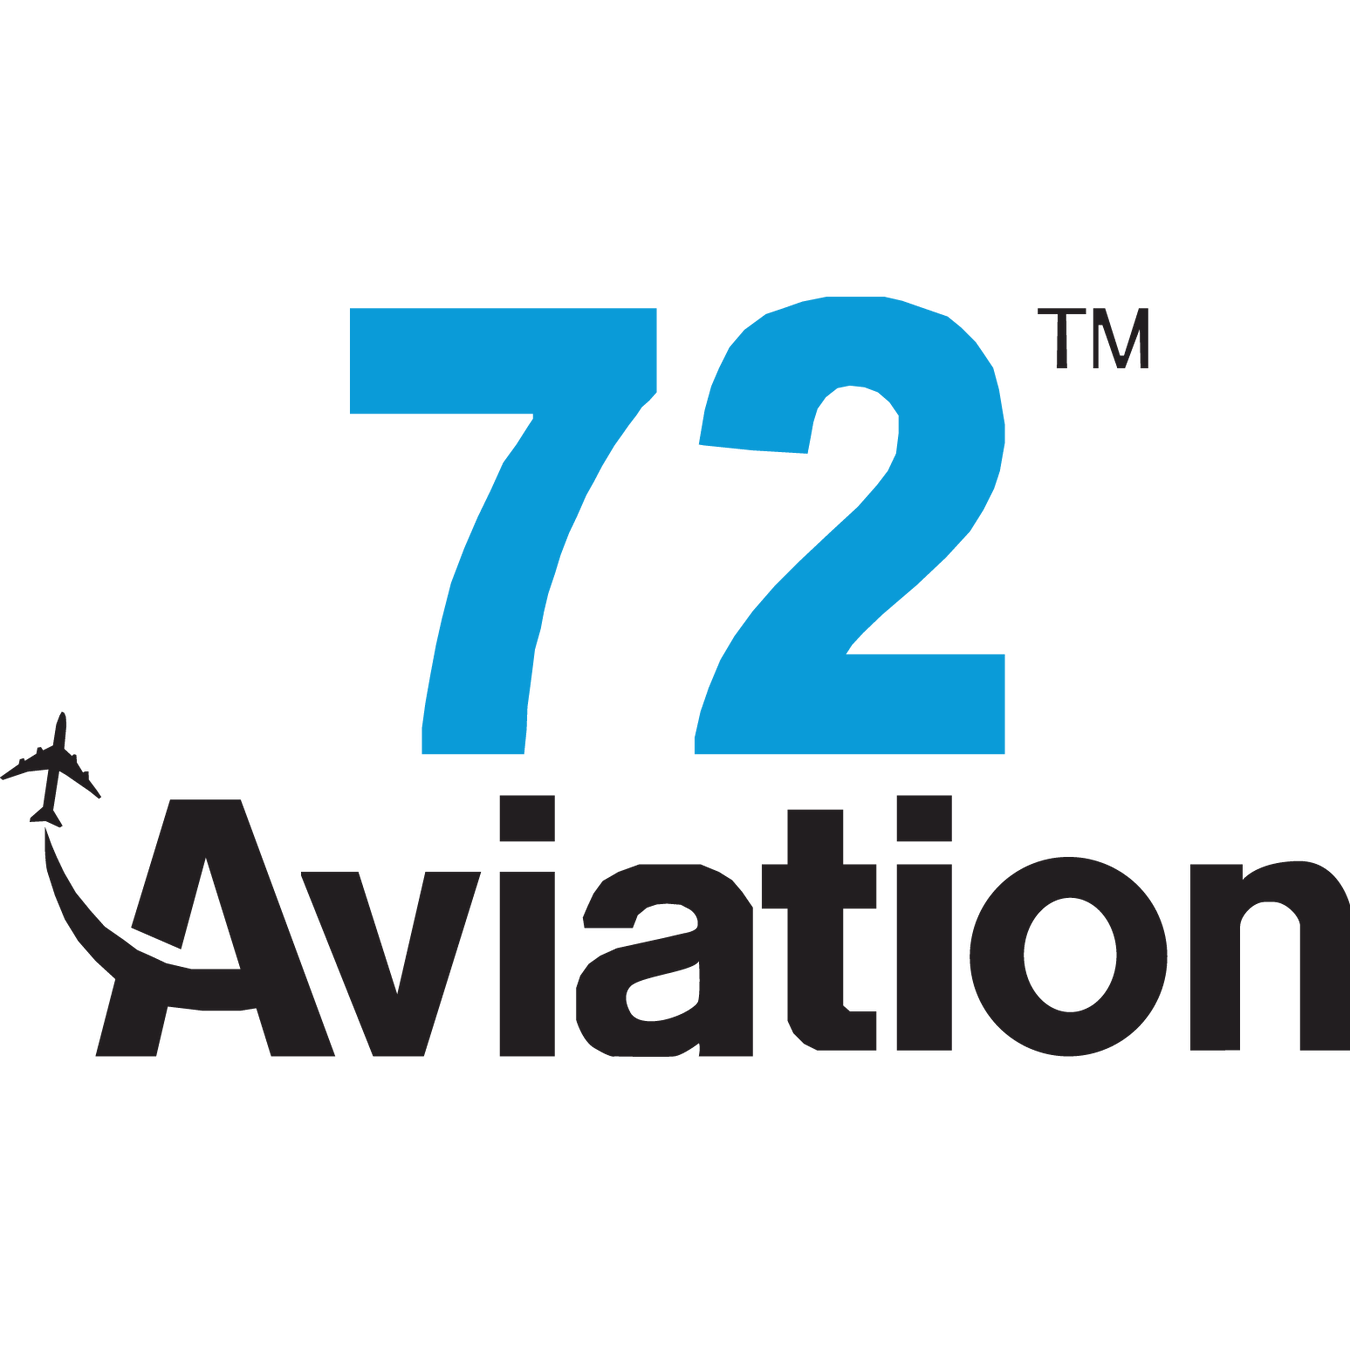 72 Aviation Models